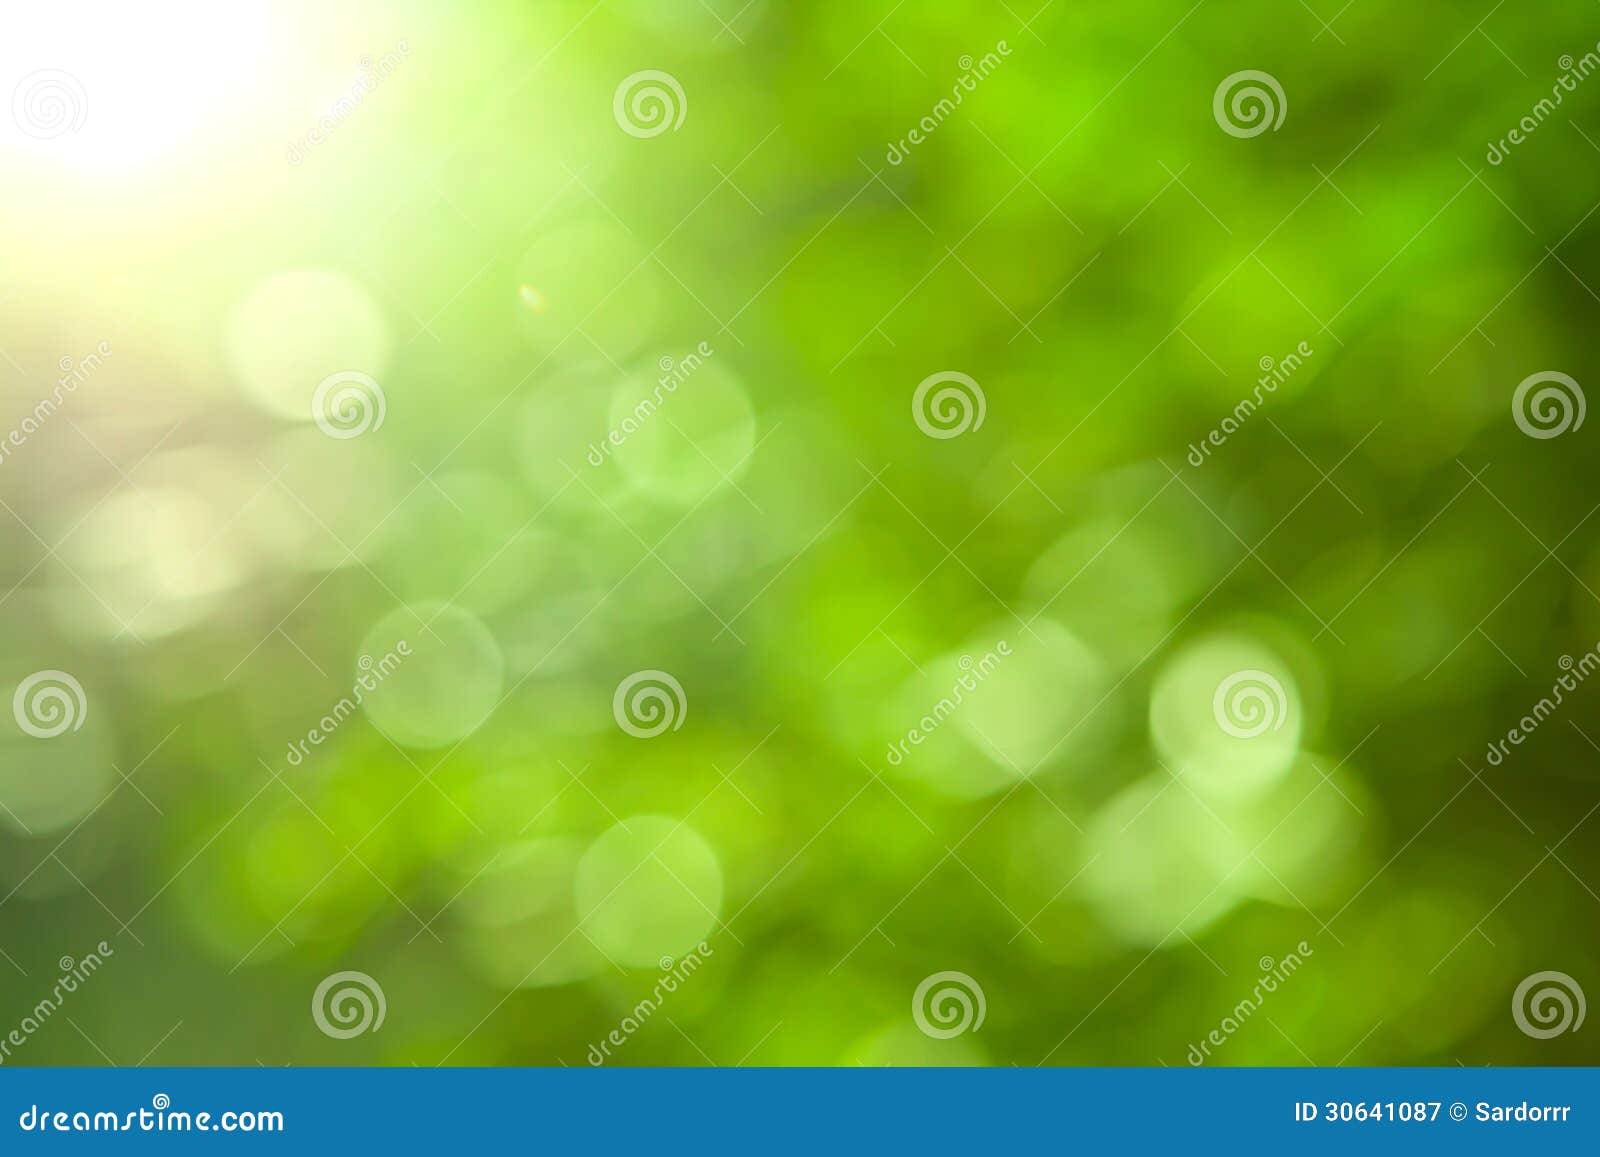 natural green blurred background